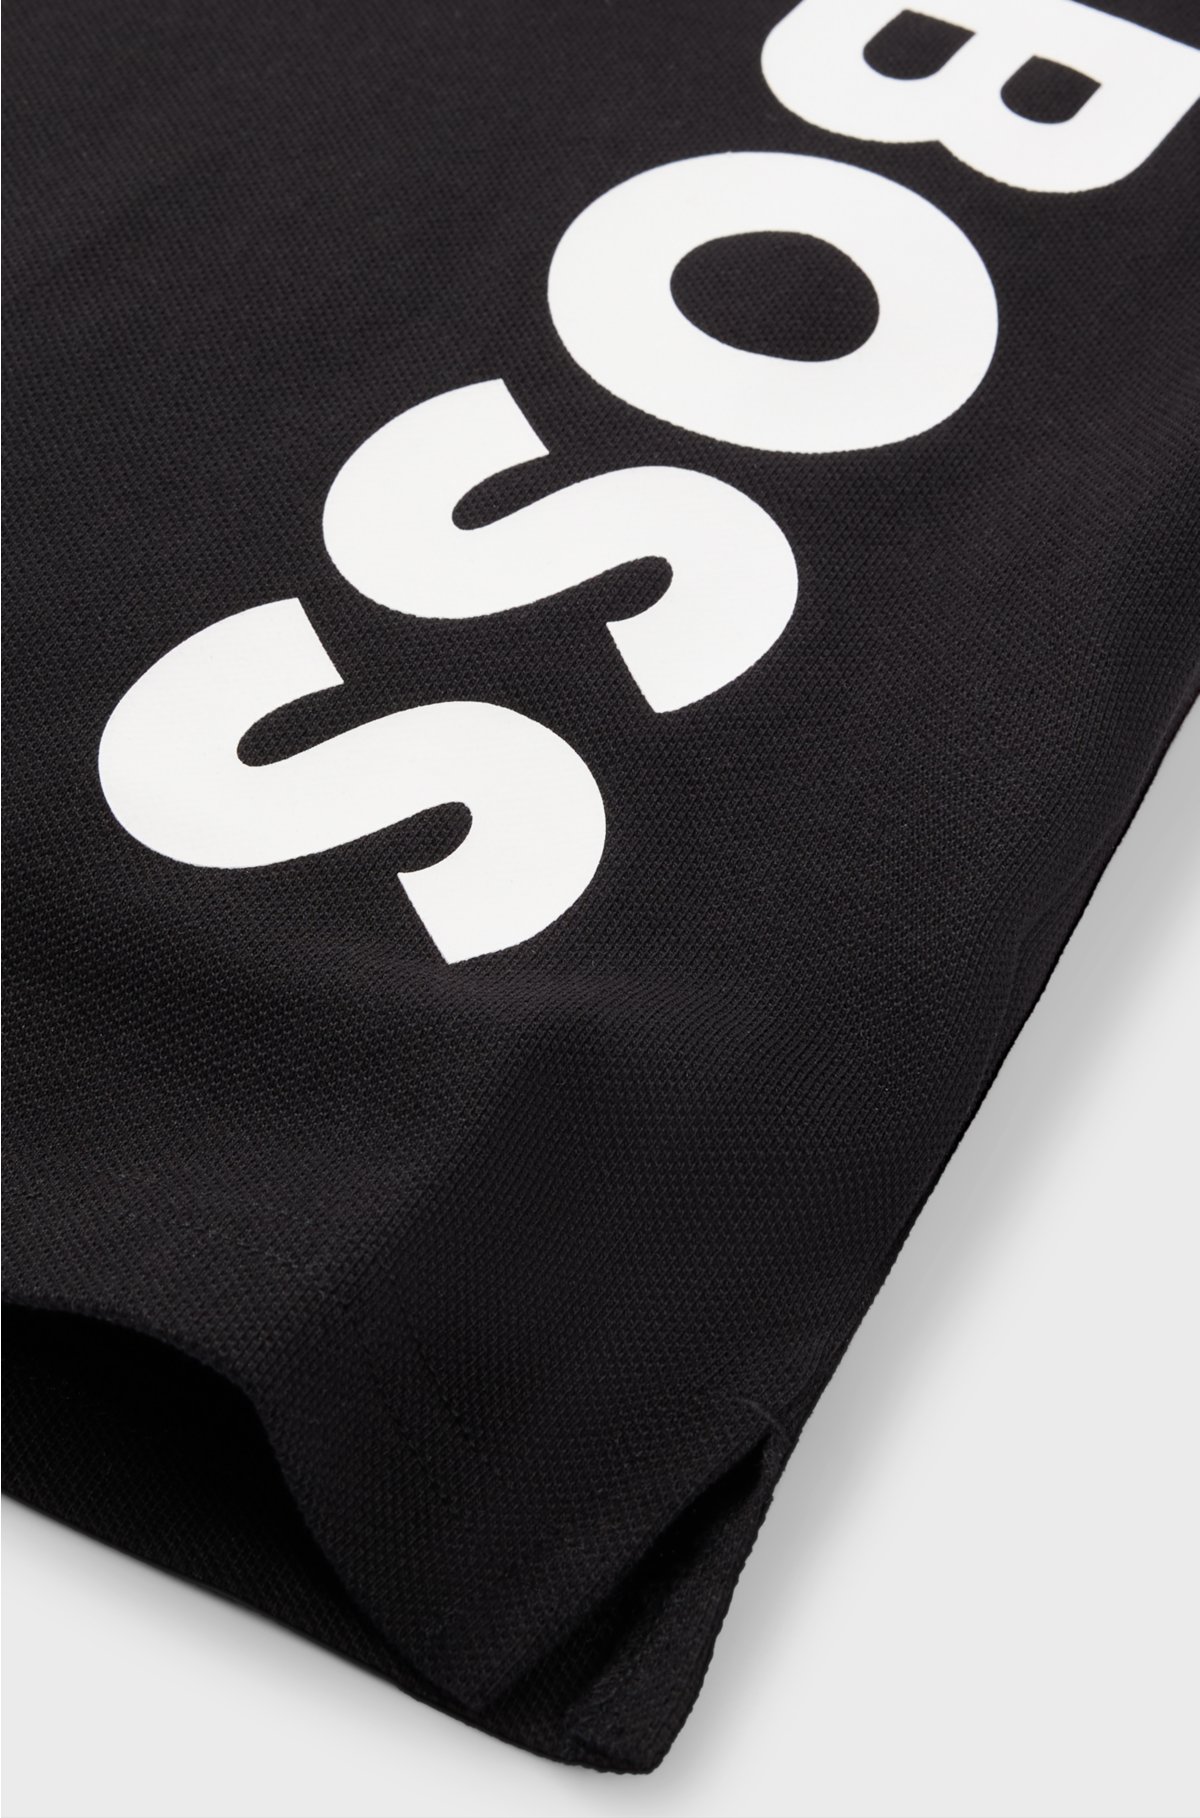 Kids' polo shirt in cotton piqué with vertical logo, Black